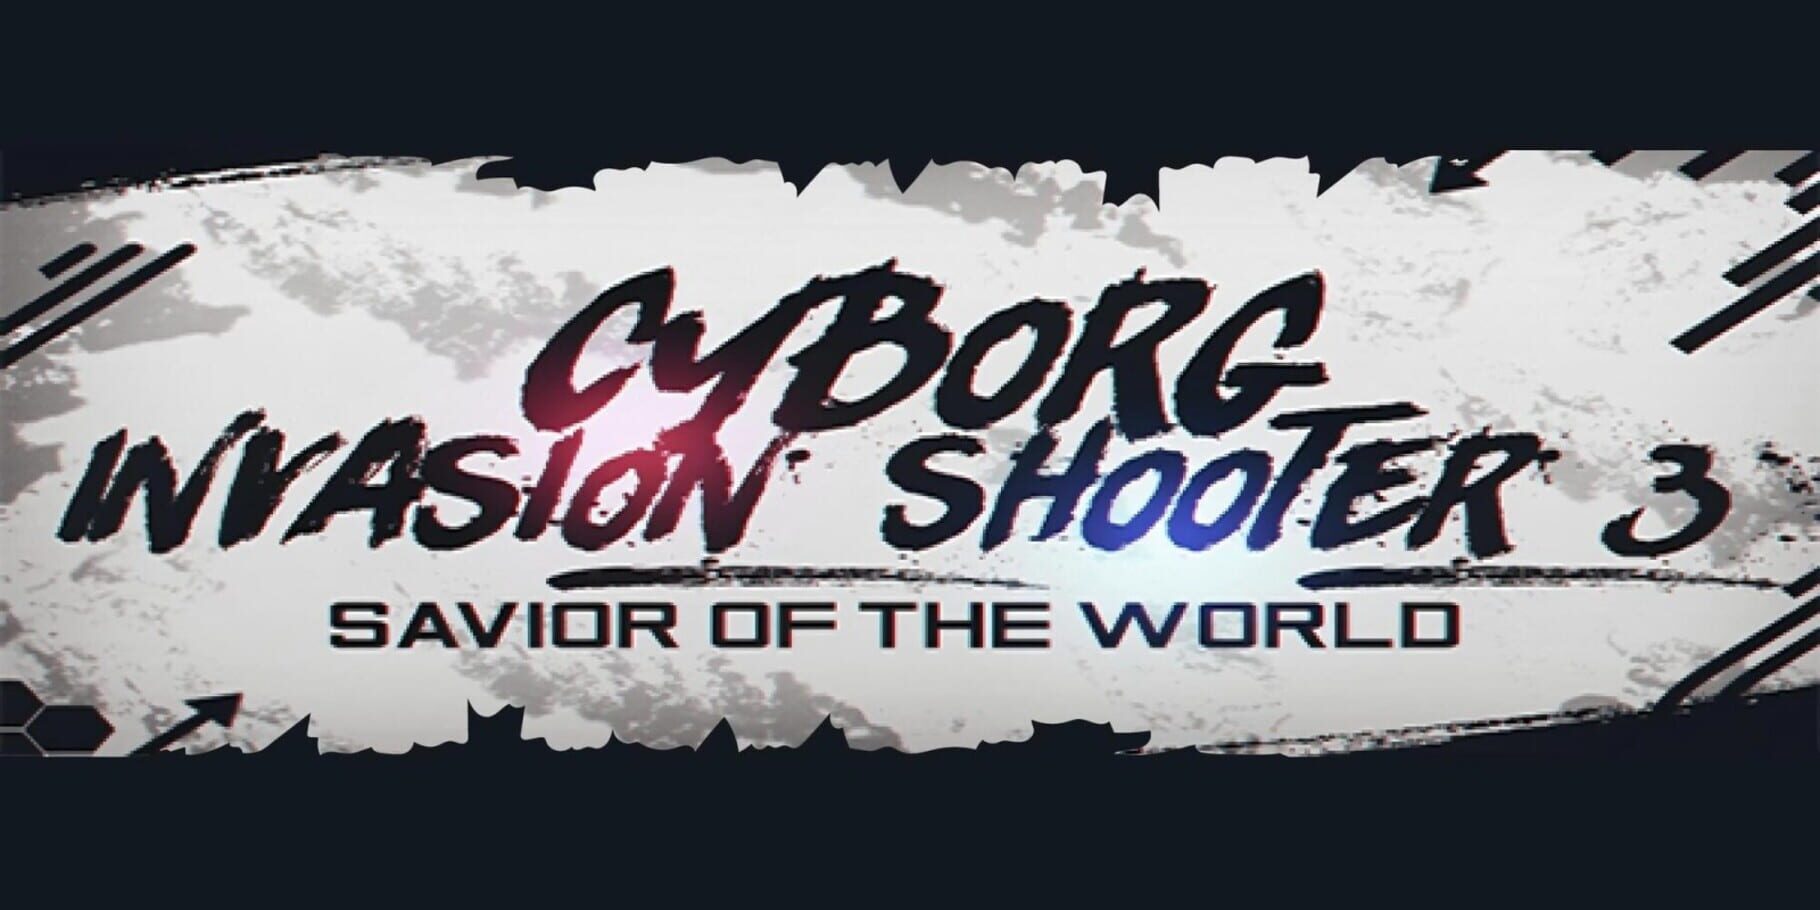 Cyborg Invasion Shooter 3: Savior of the World artwork